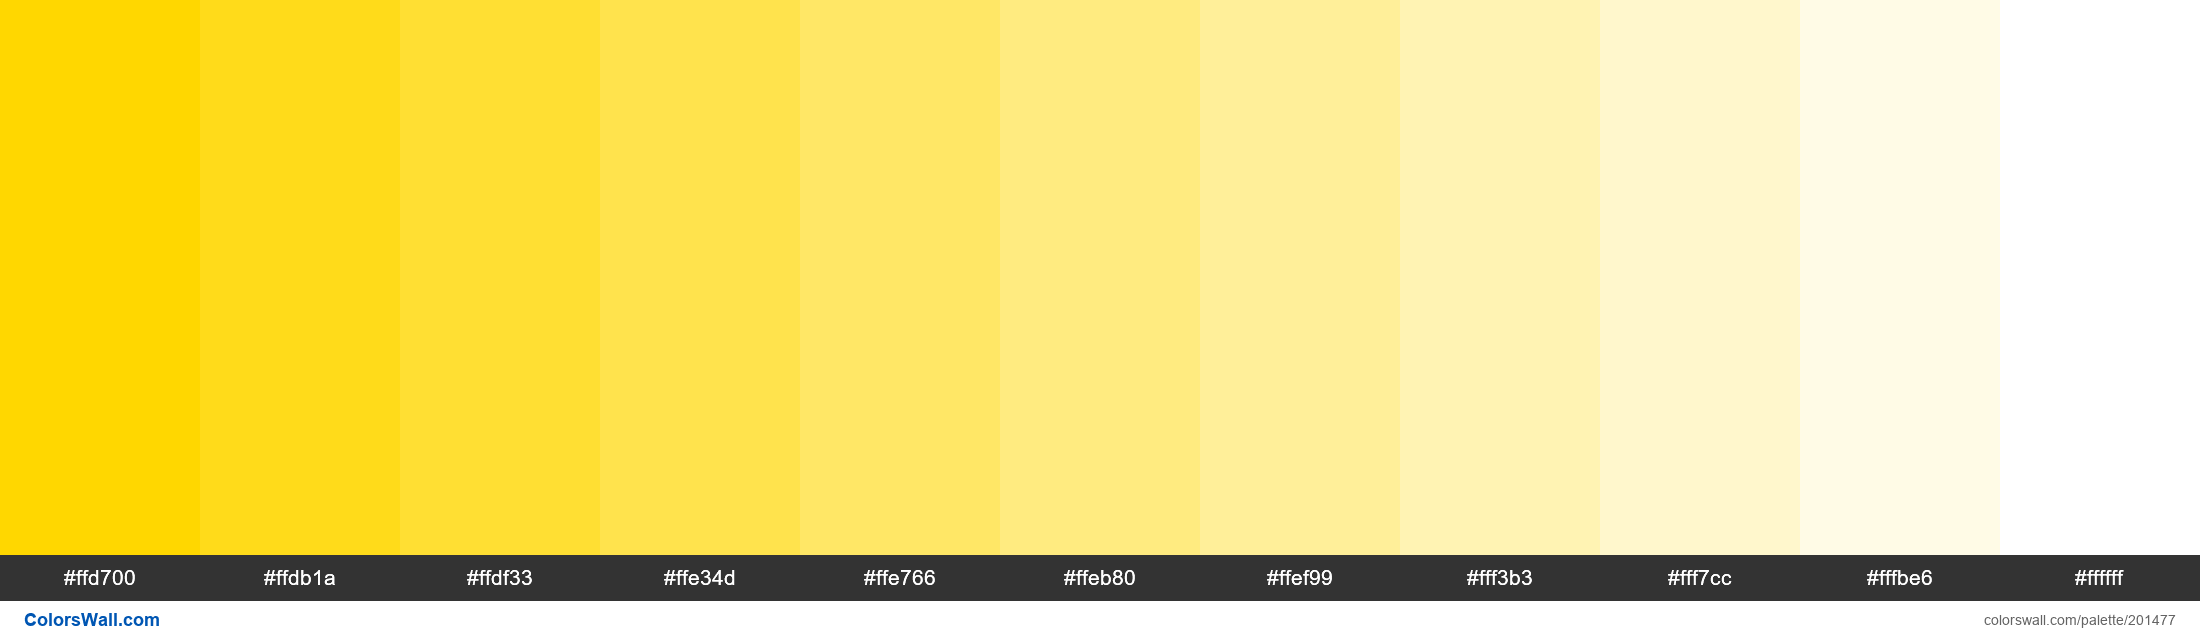 Gold paleta de colores #ffd700, #ffdb1a, #ffdf33 - ColorsWall